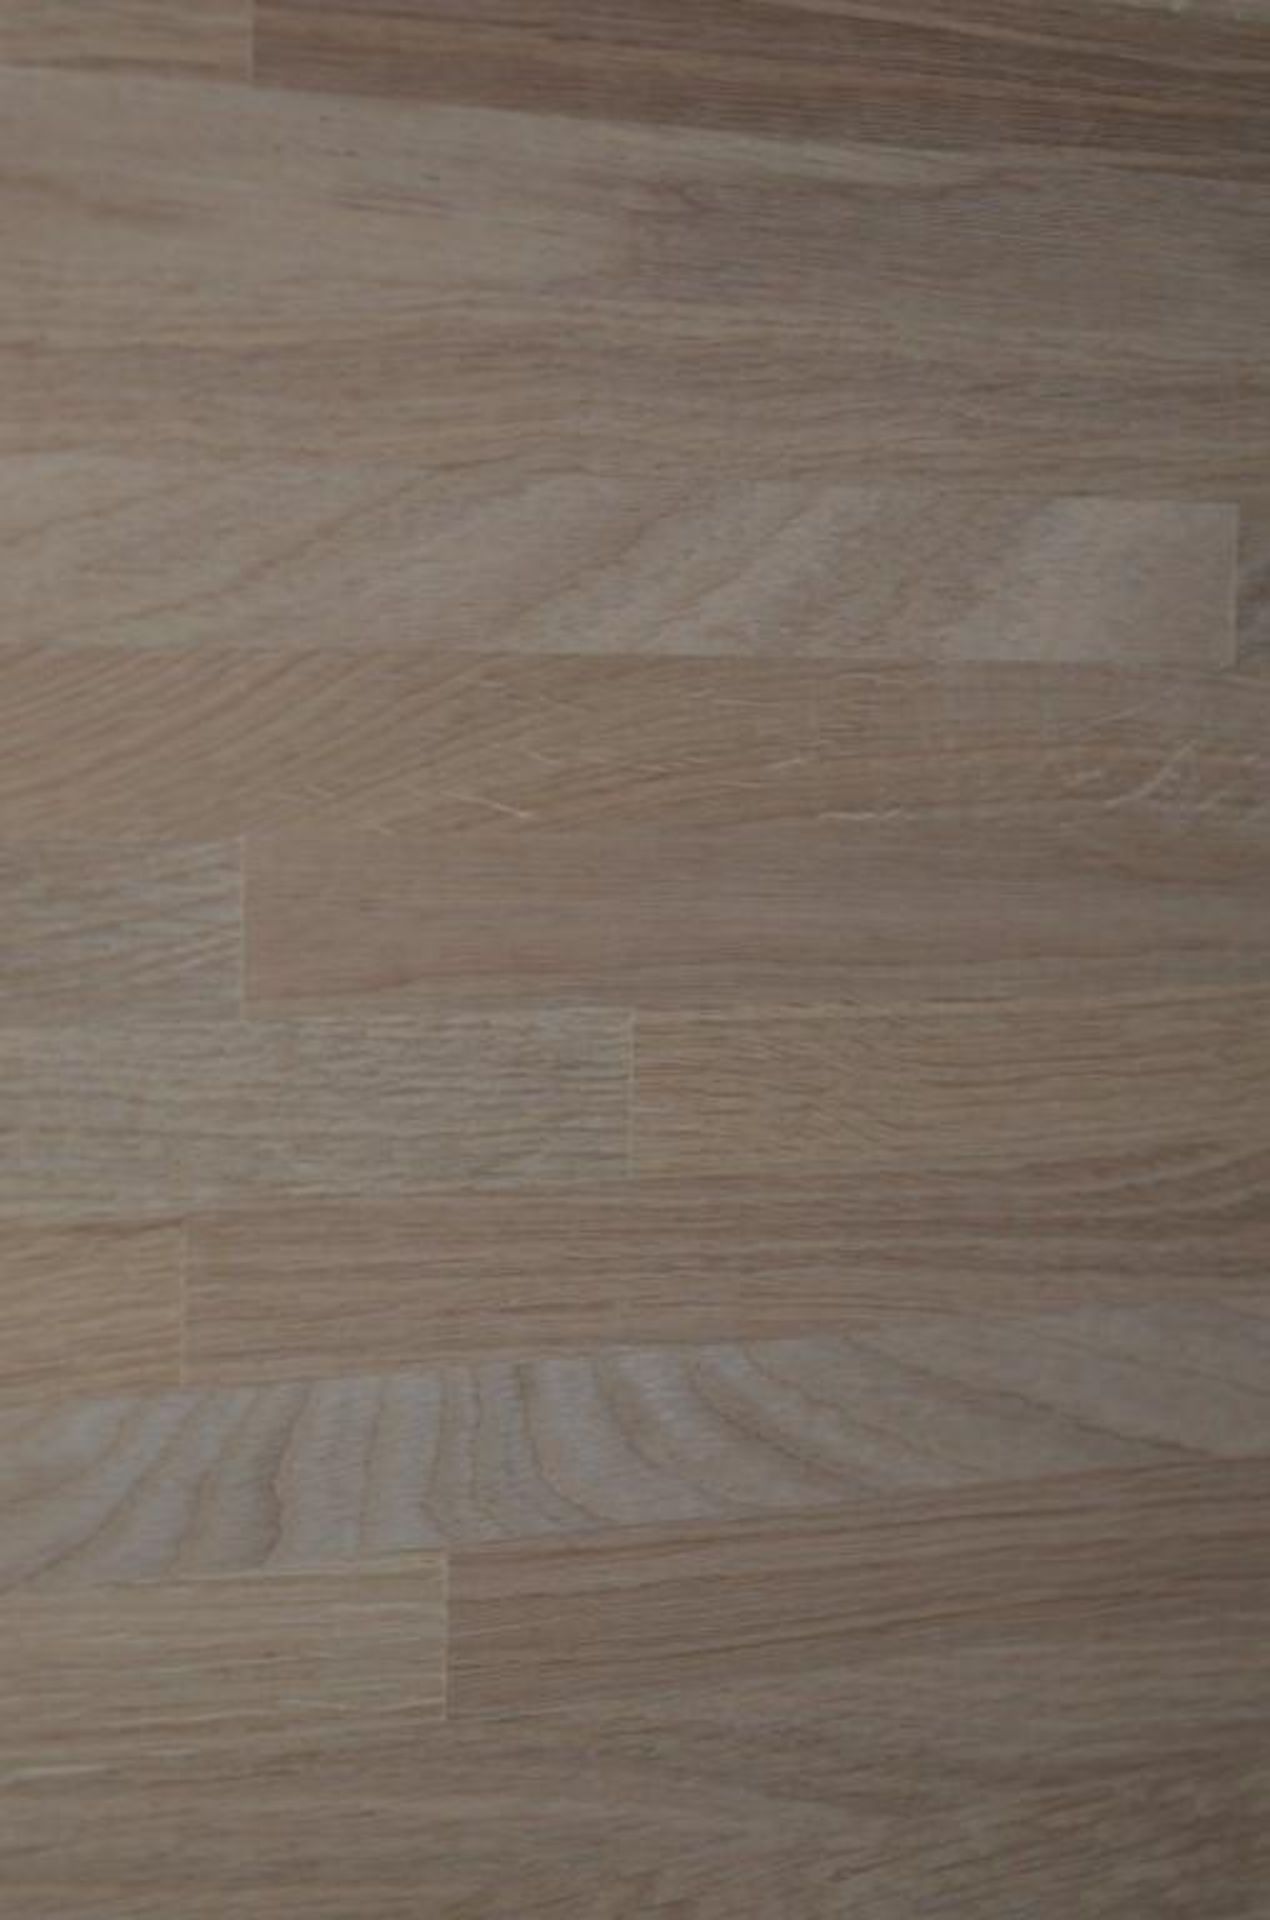 1 x Solid Wood Kitchen Worktop - OAK - Oak Blockwood Kitchen Worktop - Size: 3000 x 900 x 32mm - - Image 4 of 4